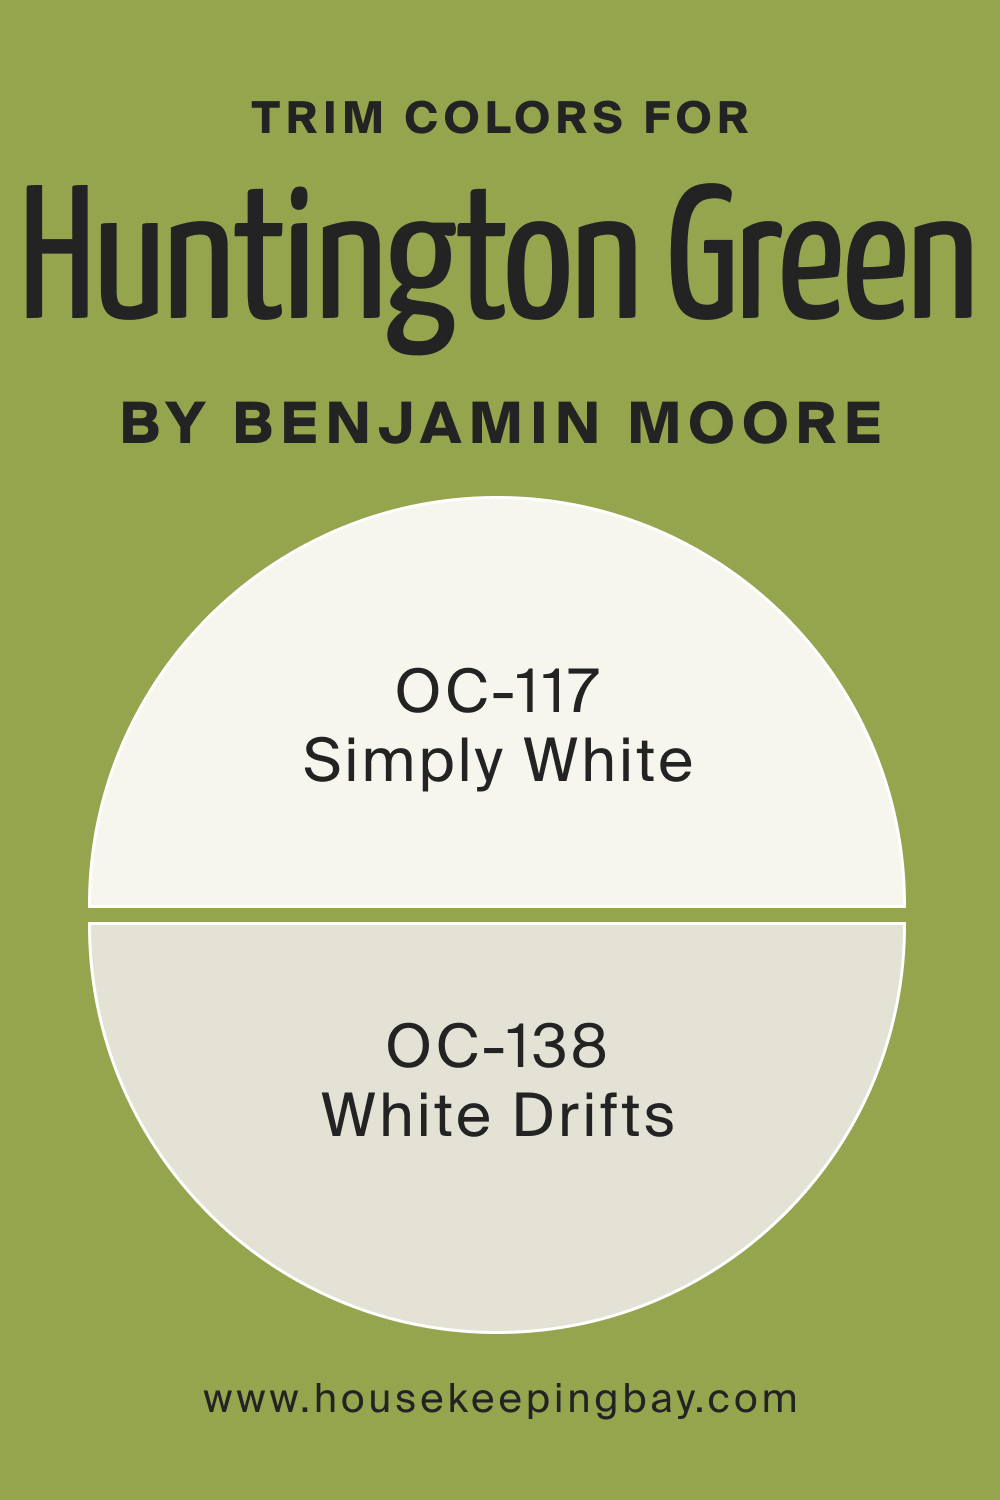 Trim Colors of Huntington Green 406